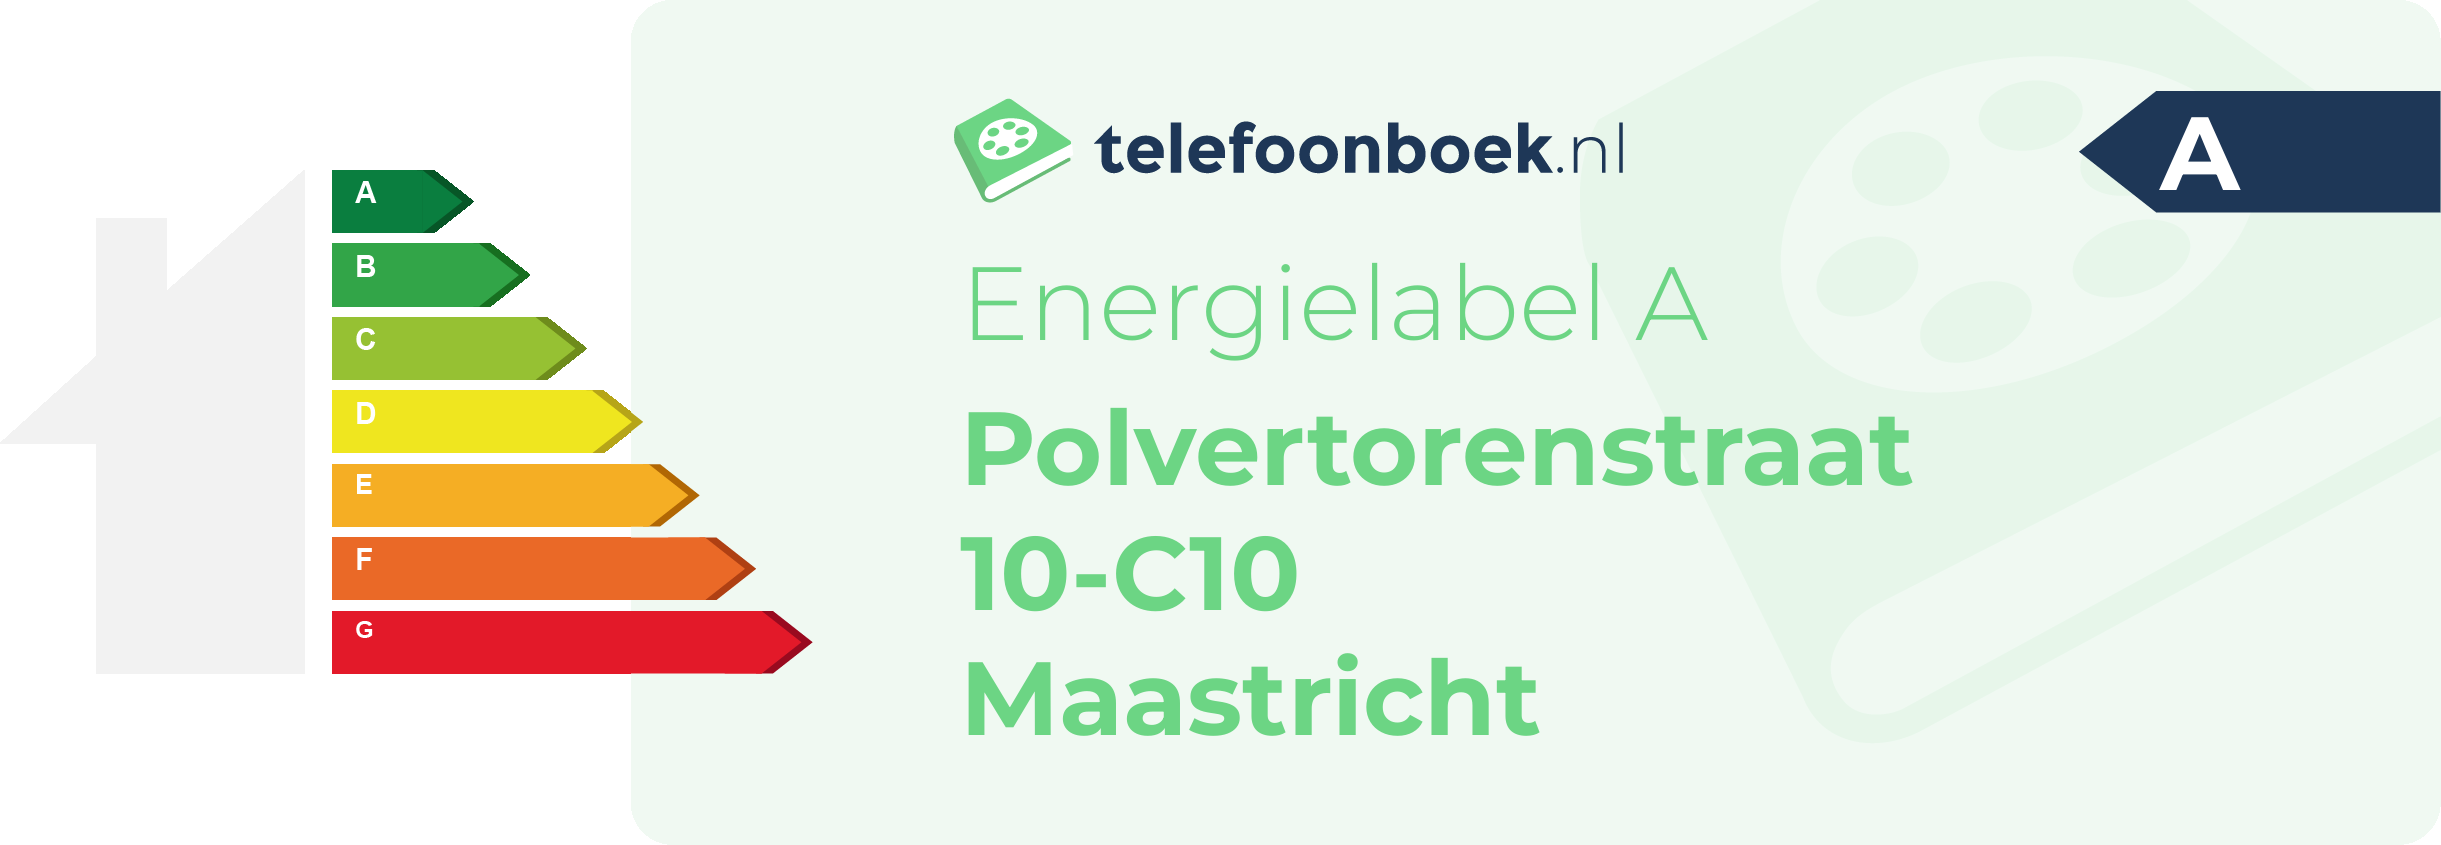 Energielabel Polvertorenstraat 10-C10 Maastricht